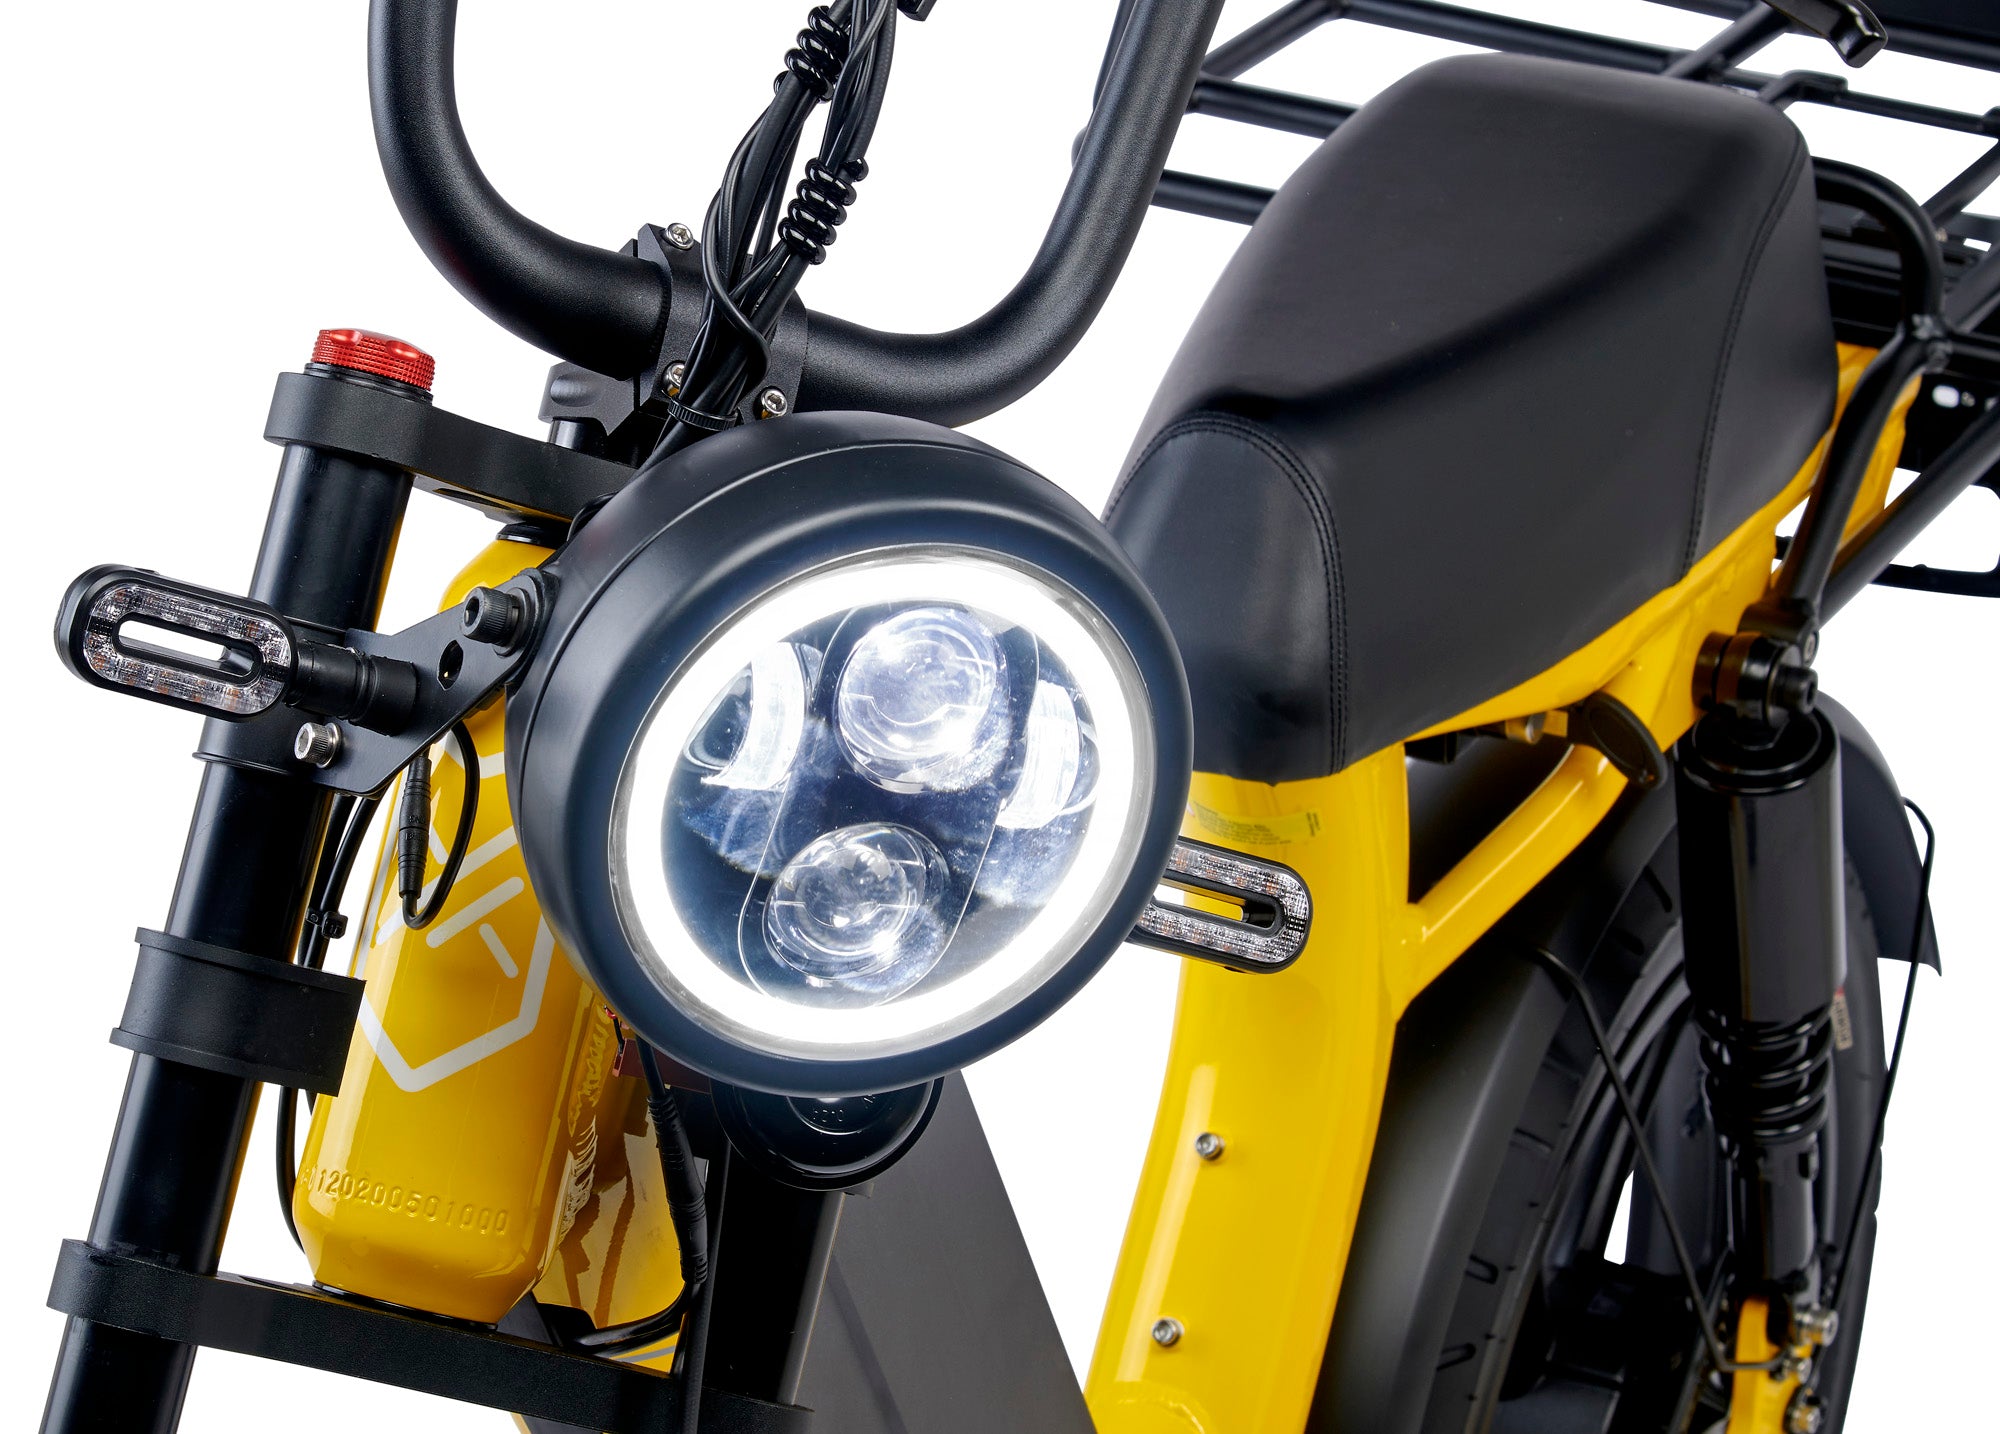 Juiced bikes bright headlight